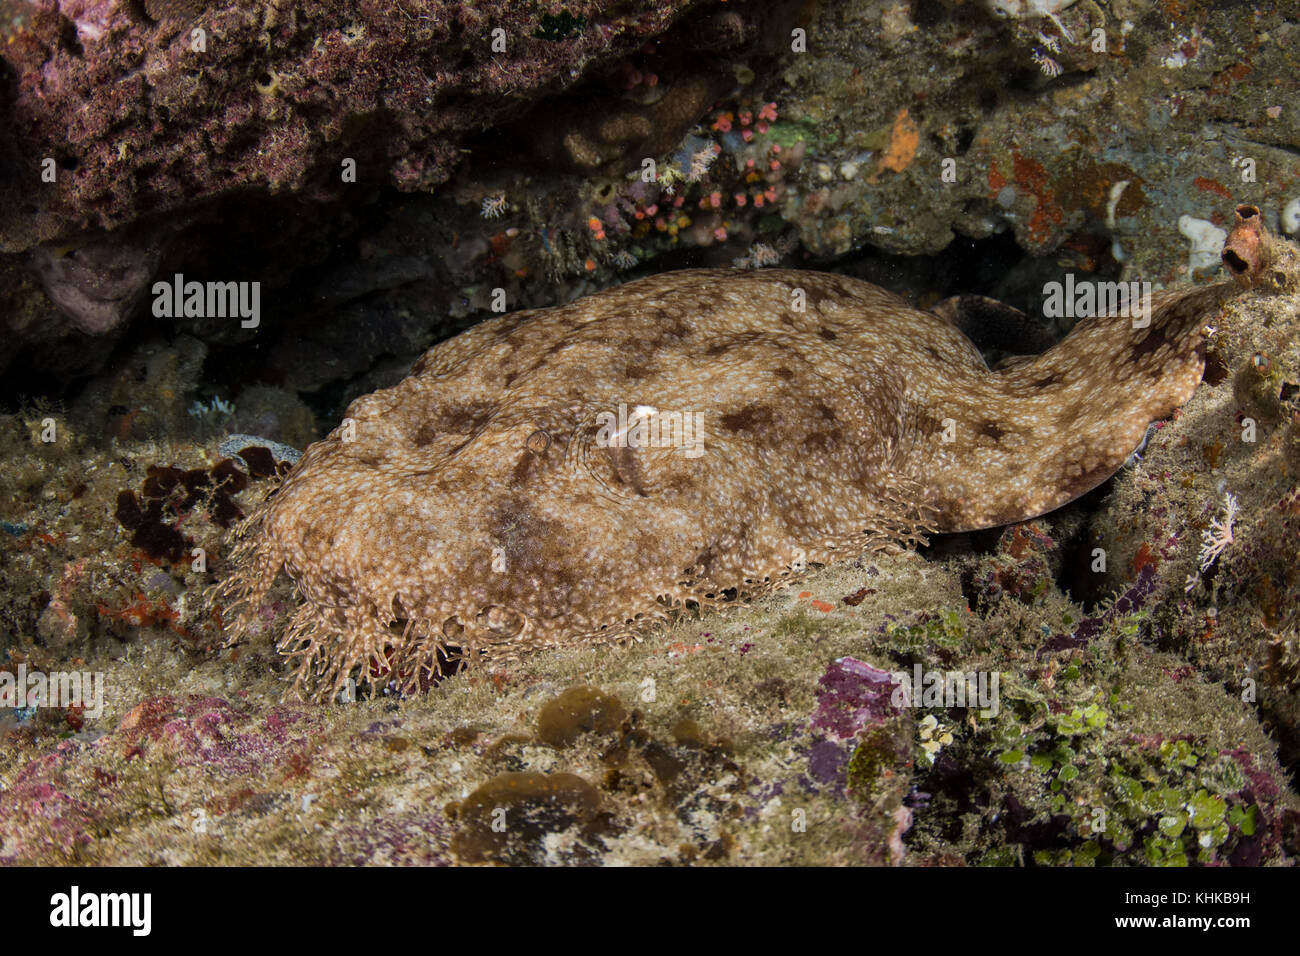 Tassled Wobbegon (Eucrossorhinus dasypogon) camouflaged in coral reef, Raja Ampat Islands, Indonesia Stock Photo